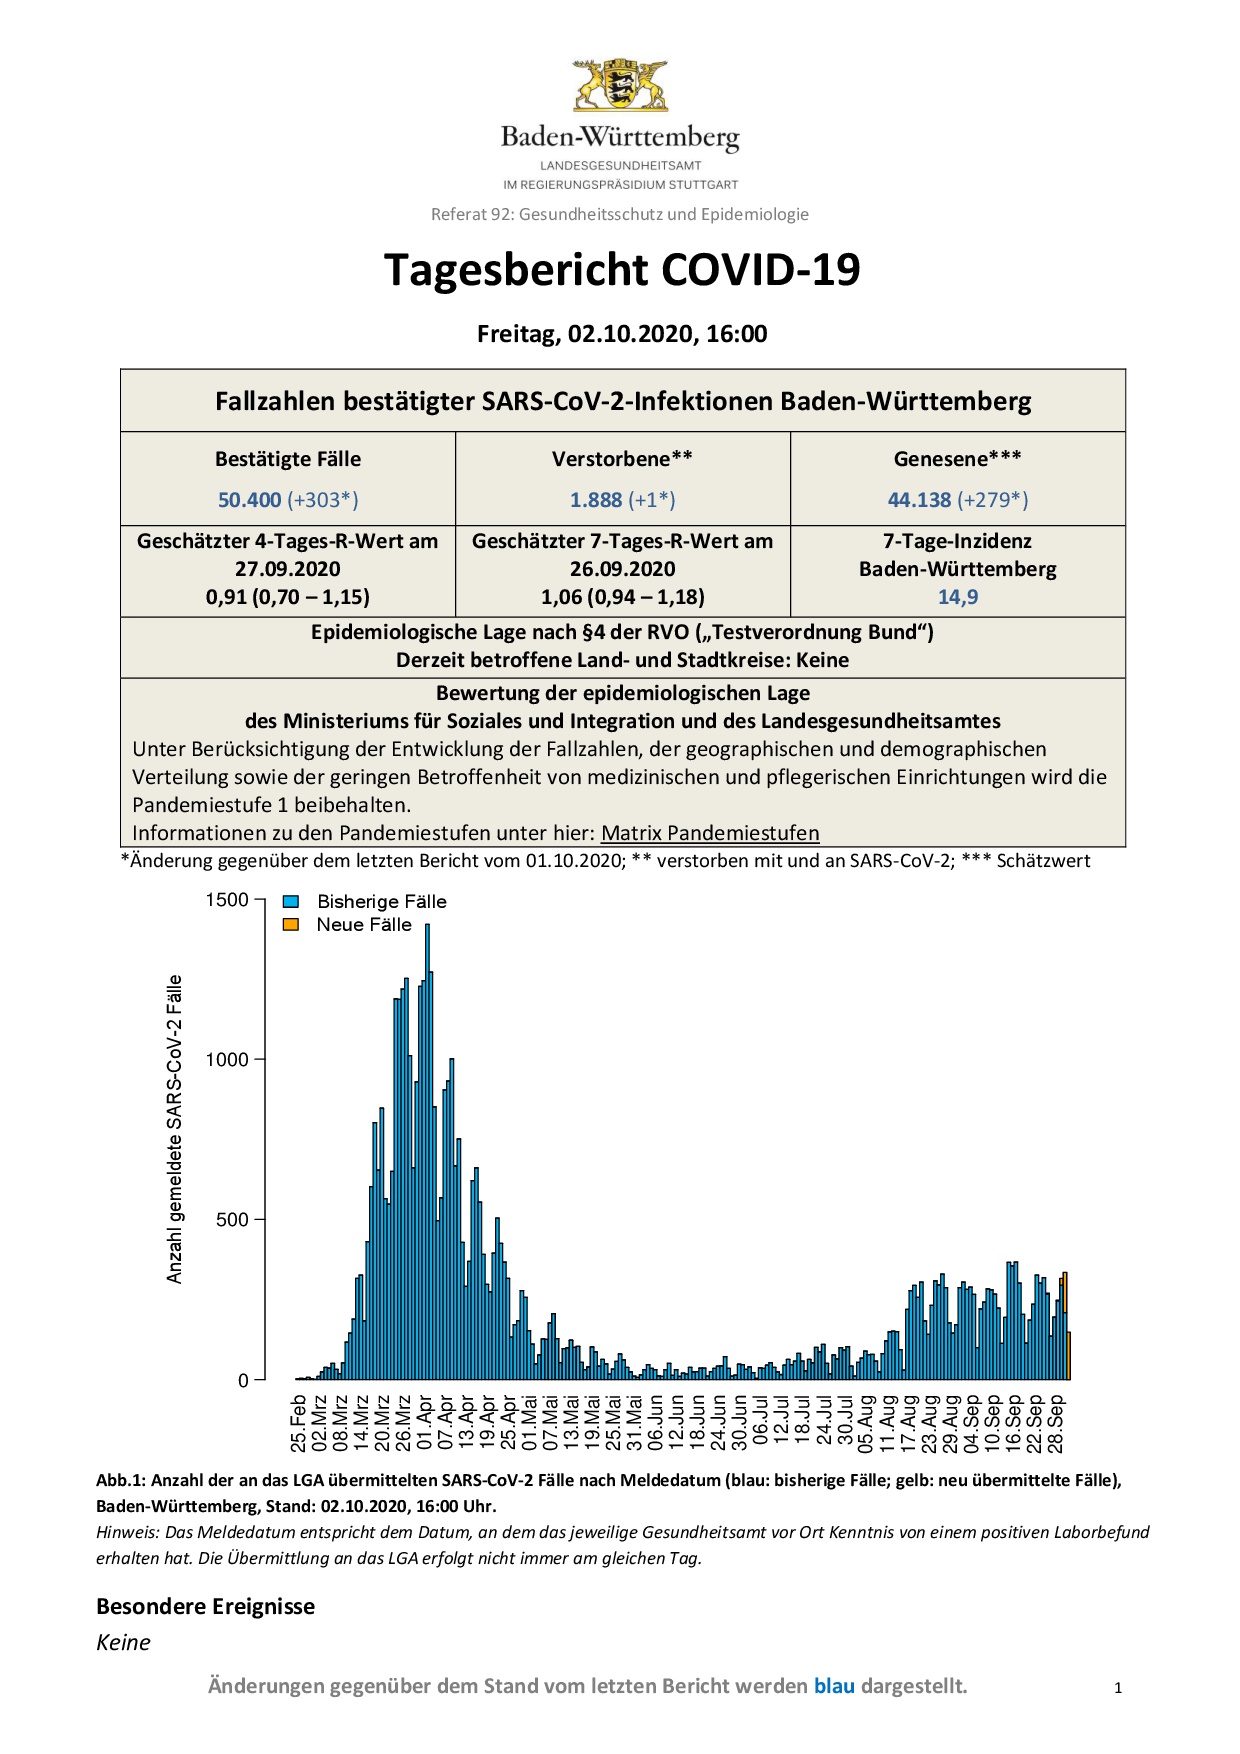 COVID-19 Tagesbericht (02.10.2020) des Landesgesundheitsamts Baden-Württemberg